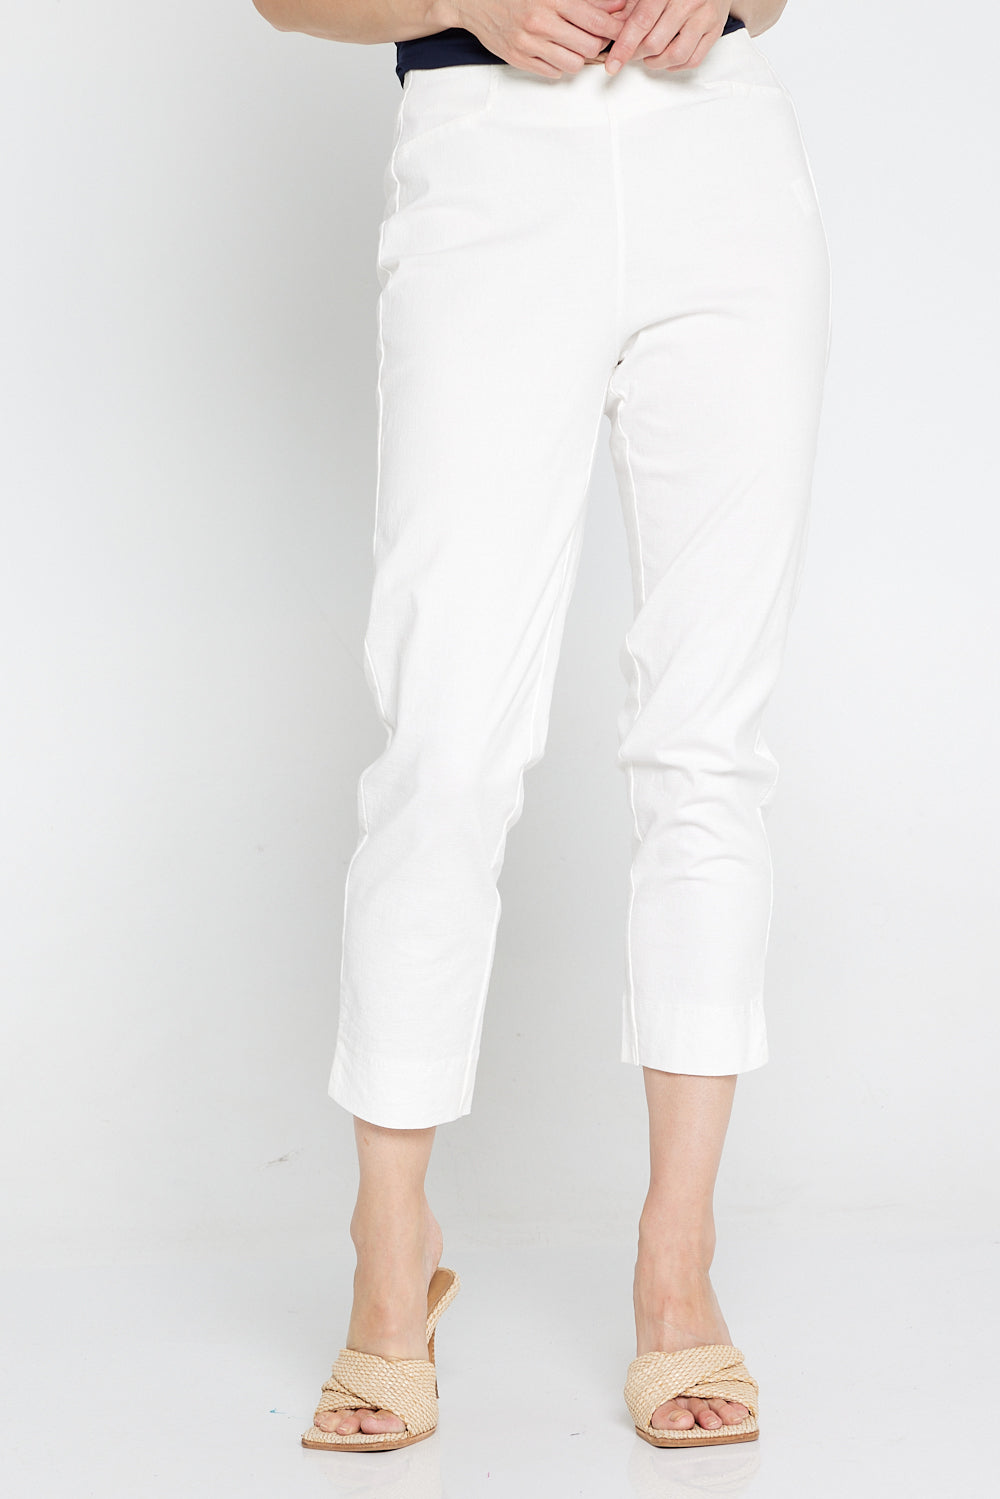 Womens Cropped Cotton Leggings Capri Length Elastic Waist Stretchy